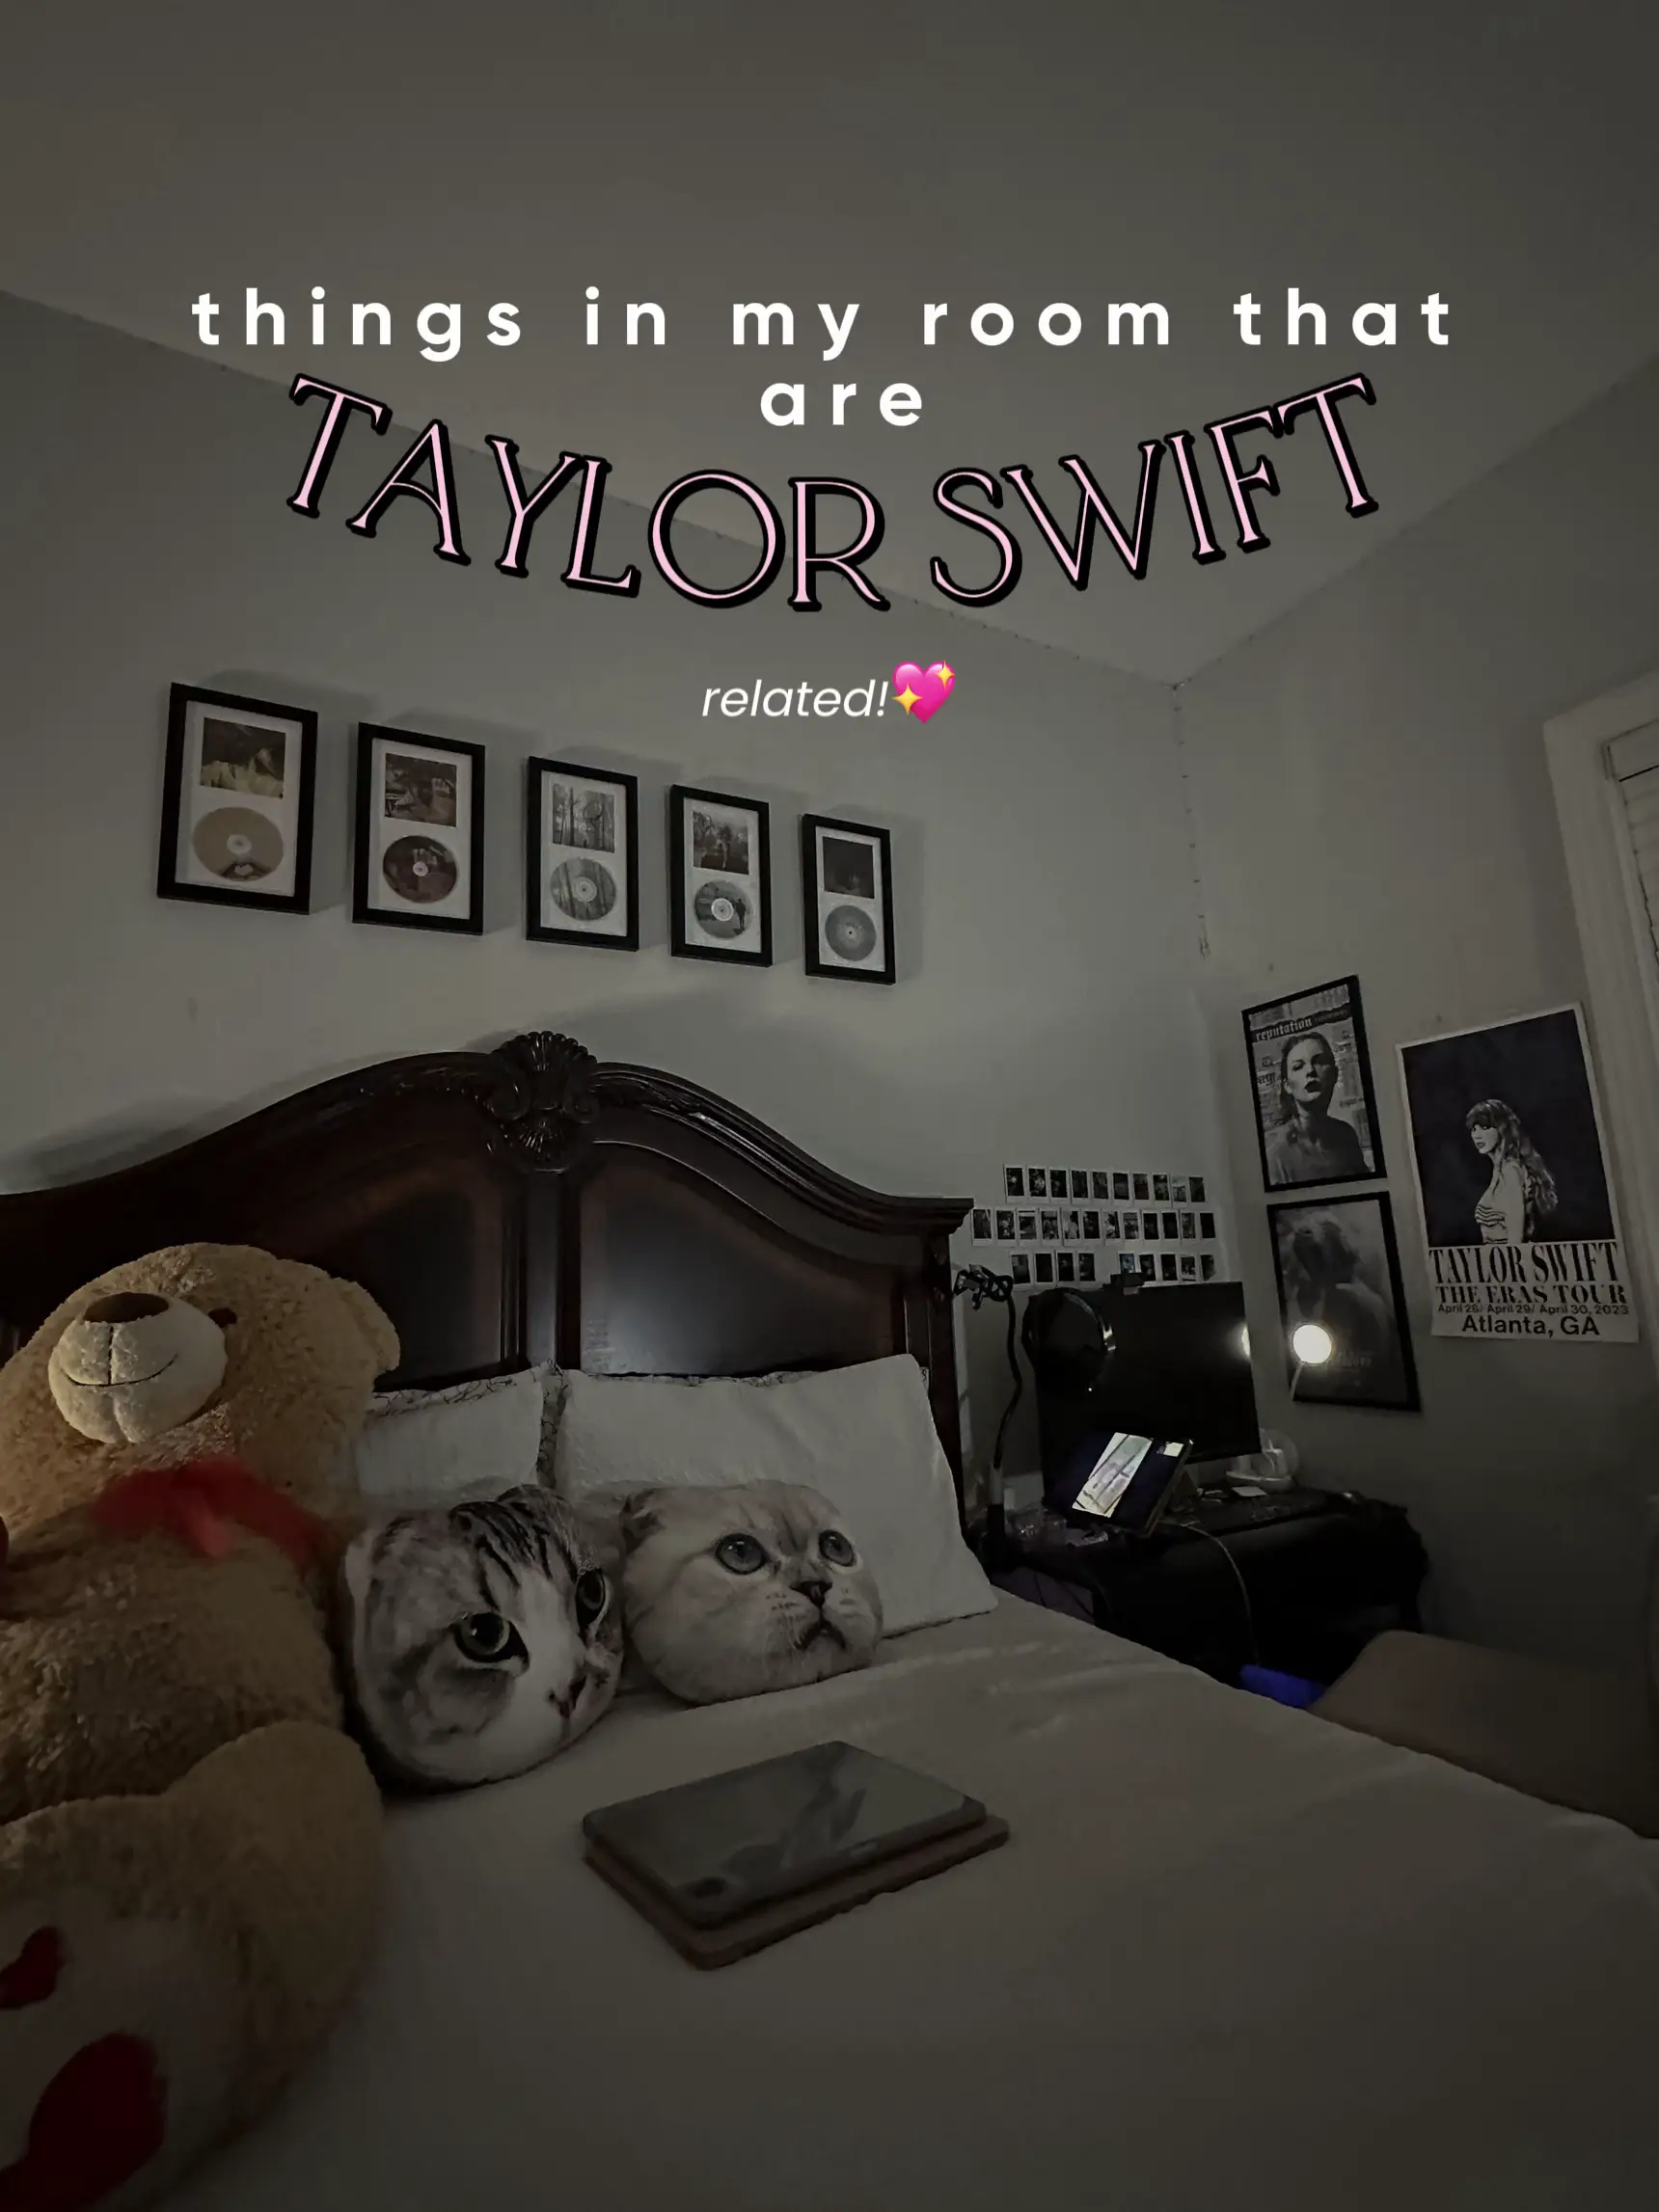 Taylor Swift inspired bedroom decor - Lemon8 Search